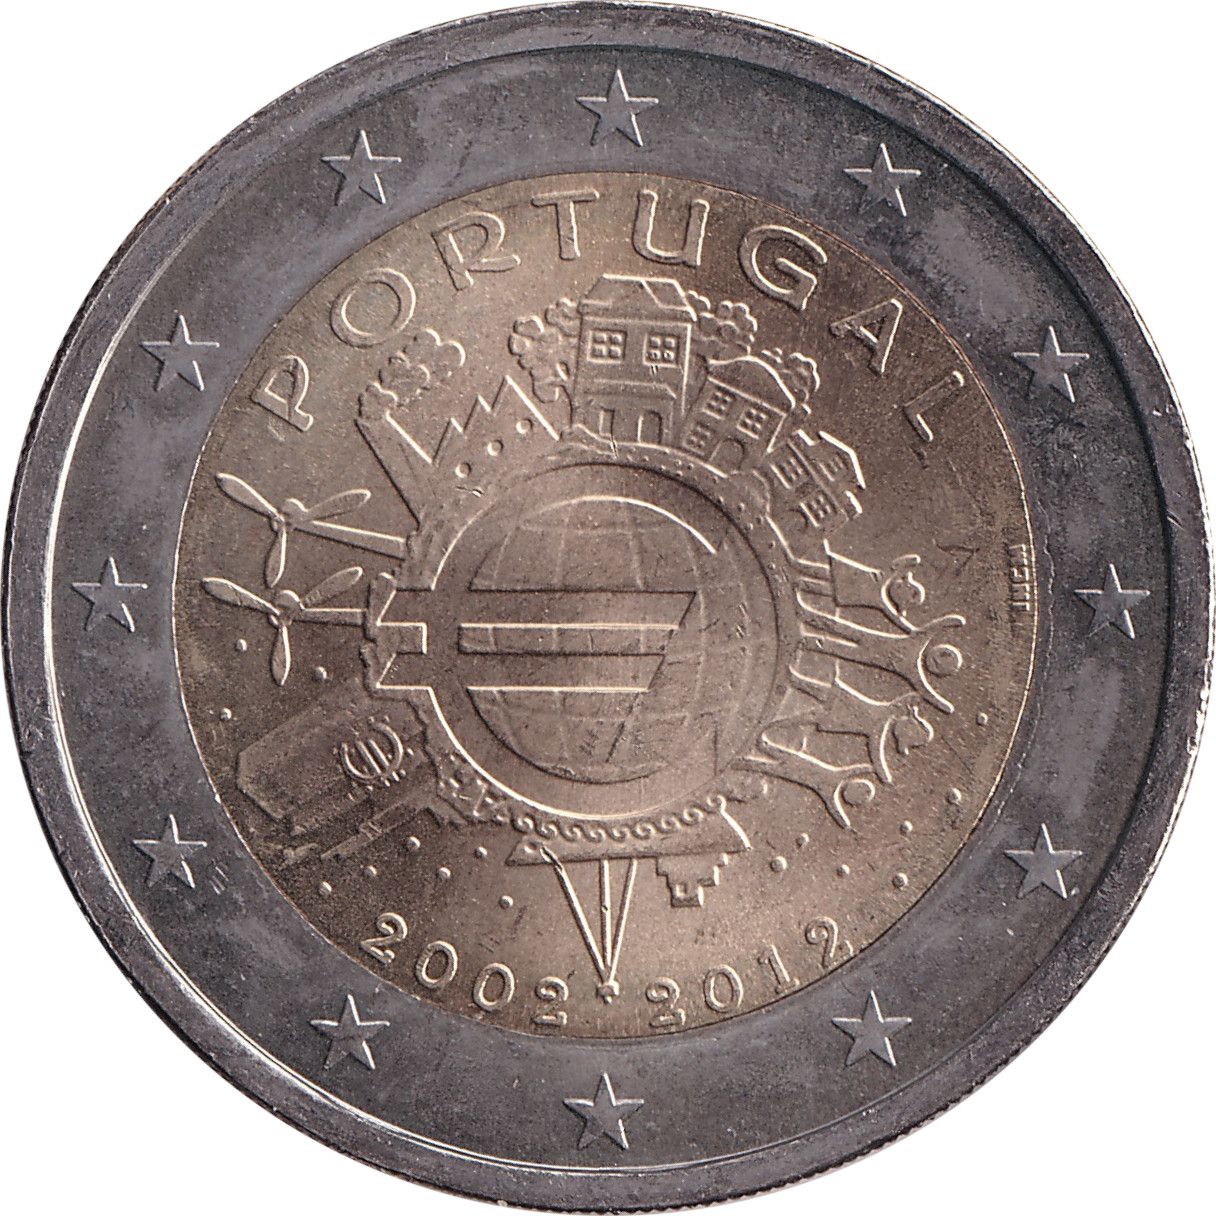 2 euro - Mise en circulation de l'Euro - Portugal